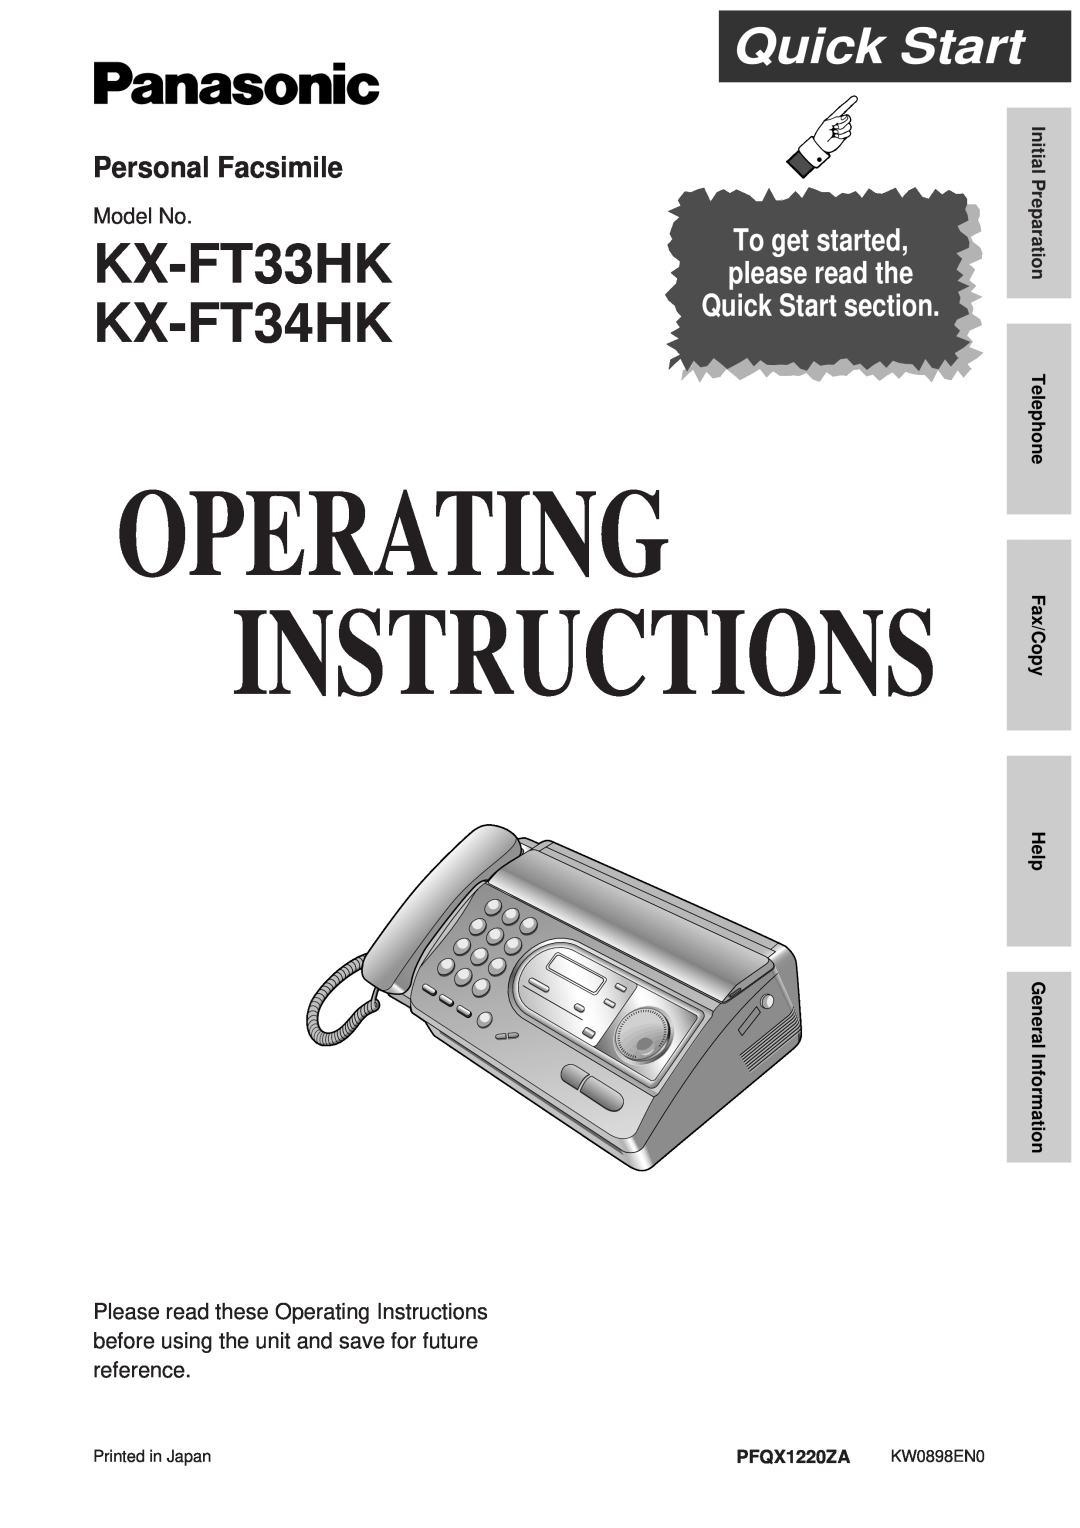 Panasonic KX-FT34HK quick start Quick Start, Personal Facsimile, Please read these Operating Instructions, KX-FT33HK 